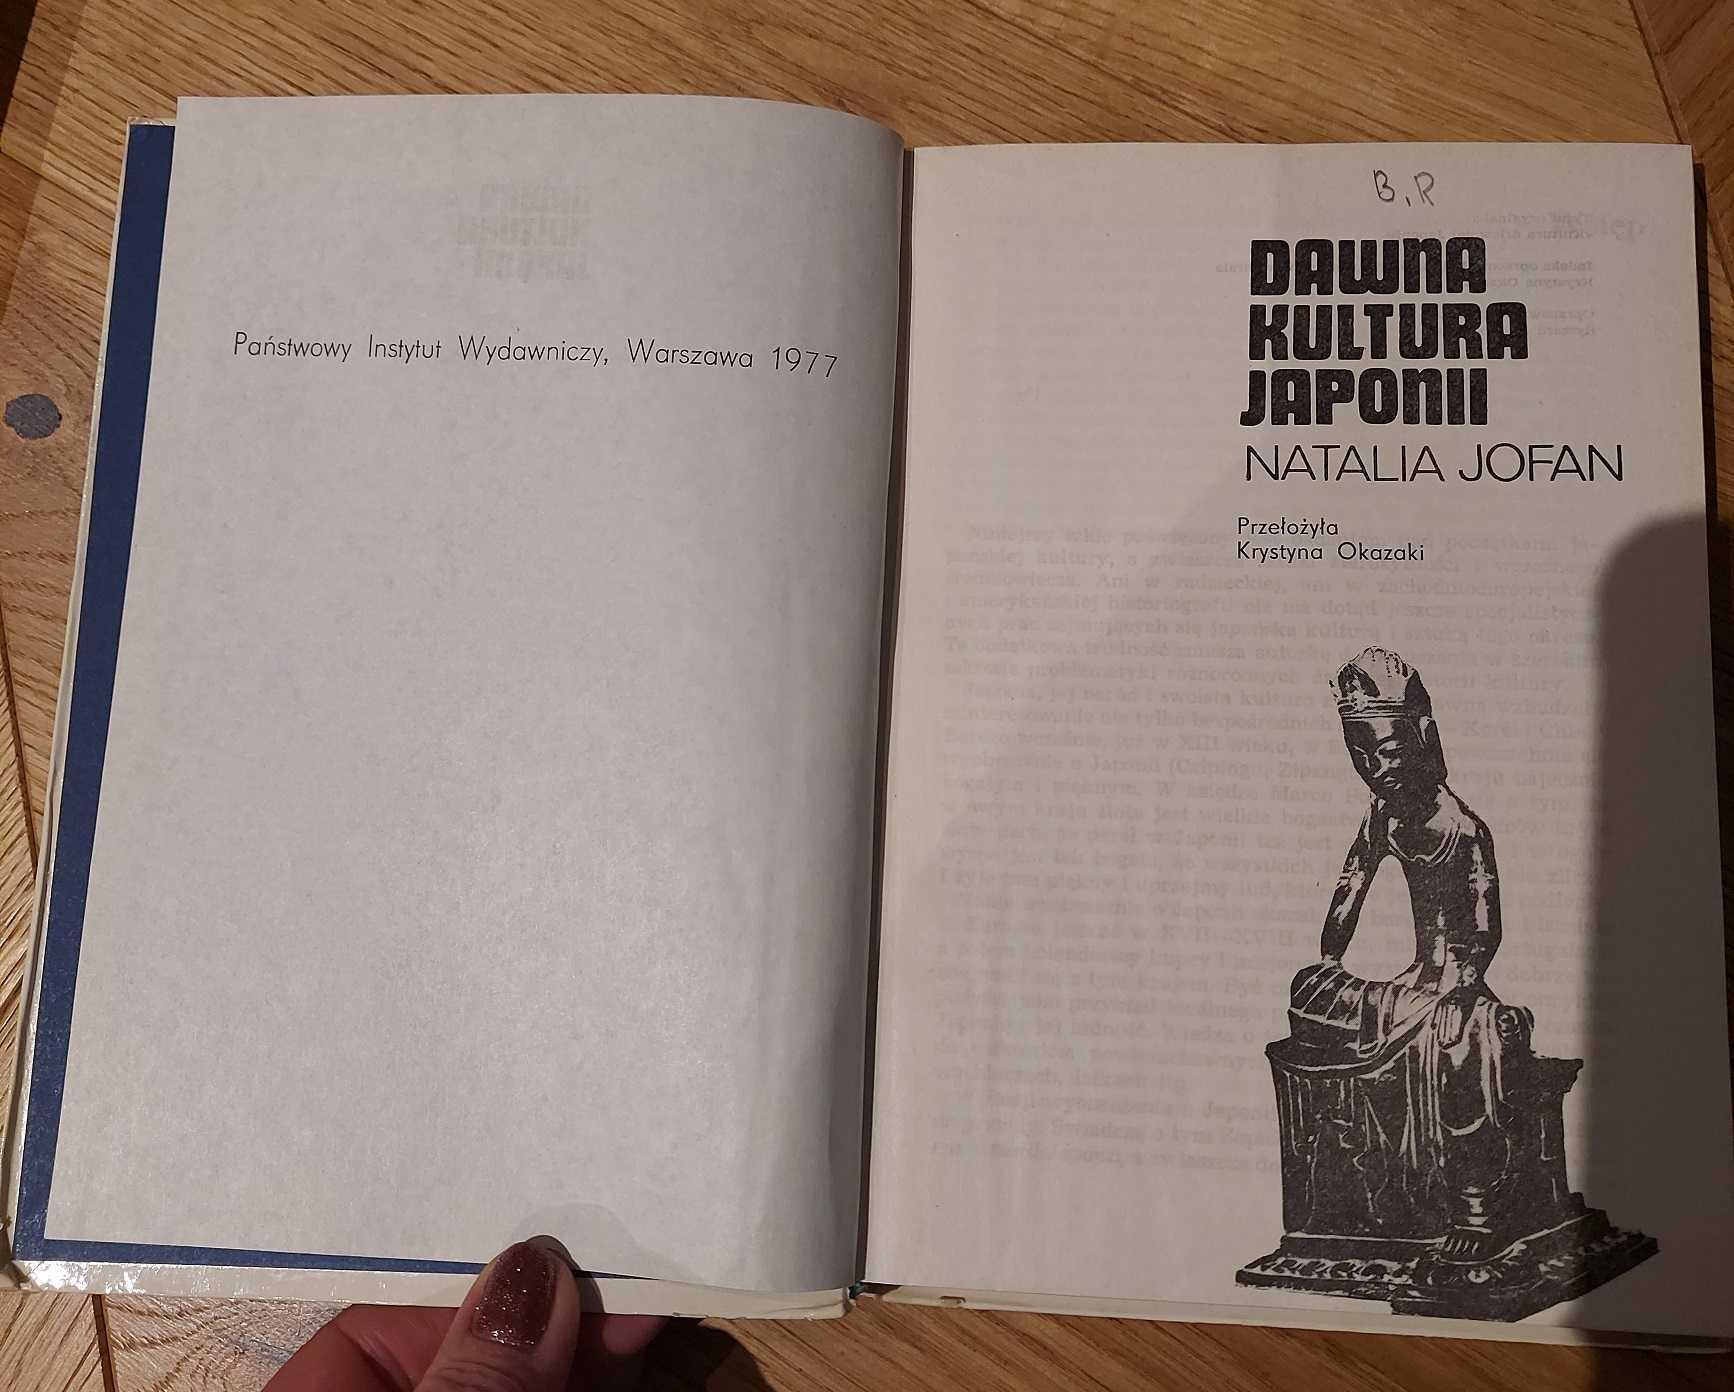 Dawna kultura Japonii książka Natalia Jofan